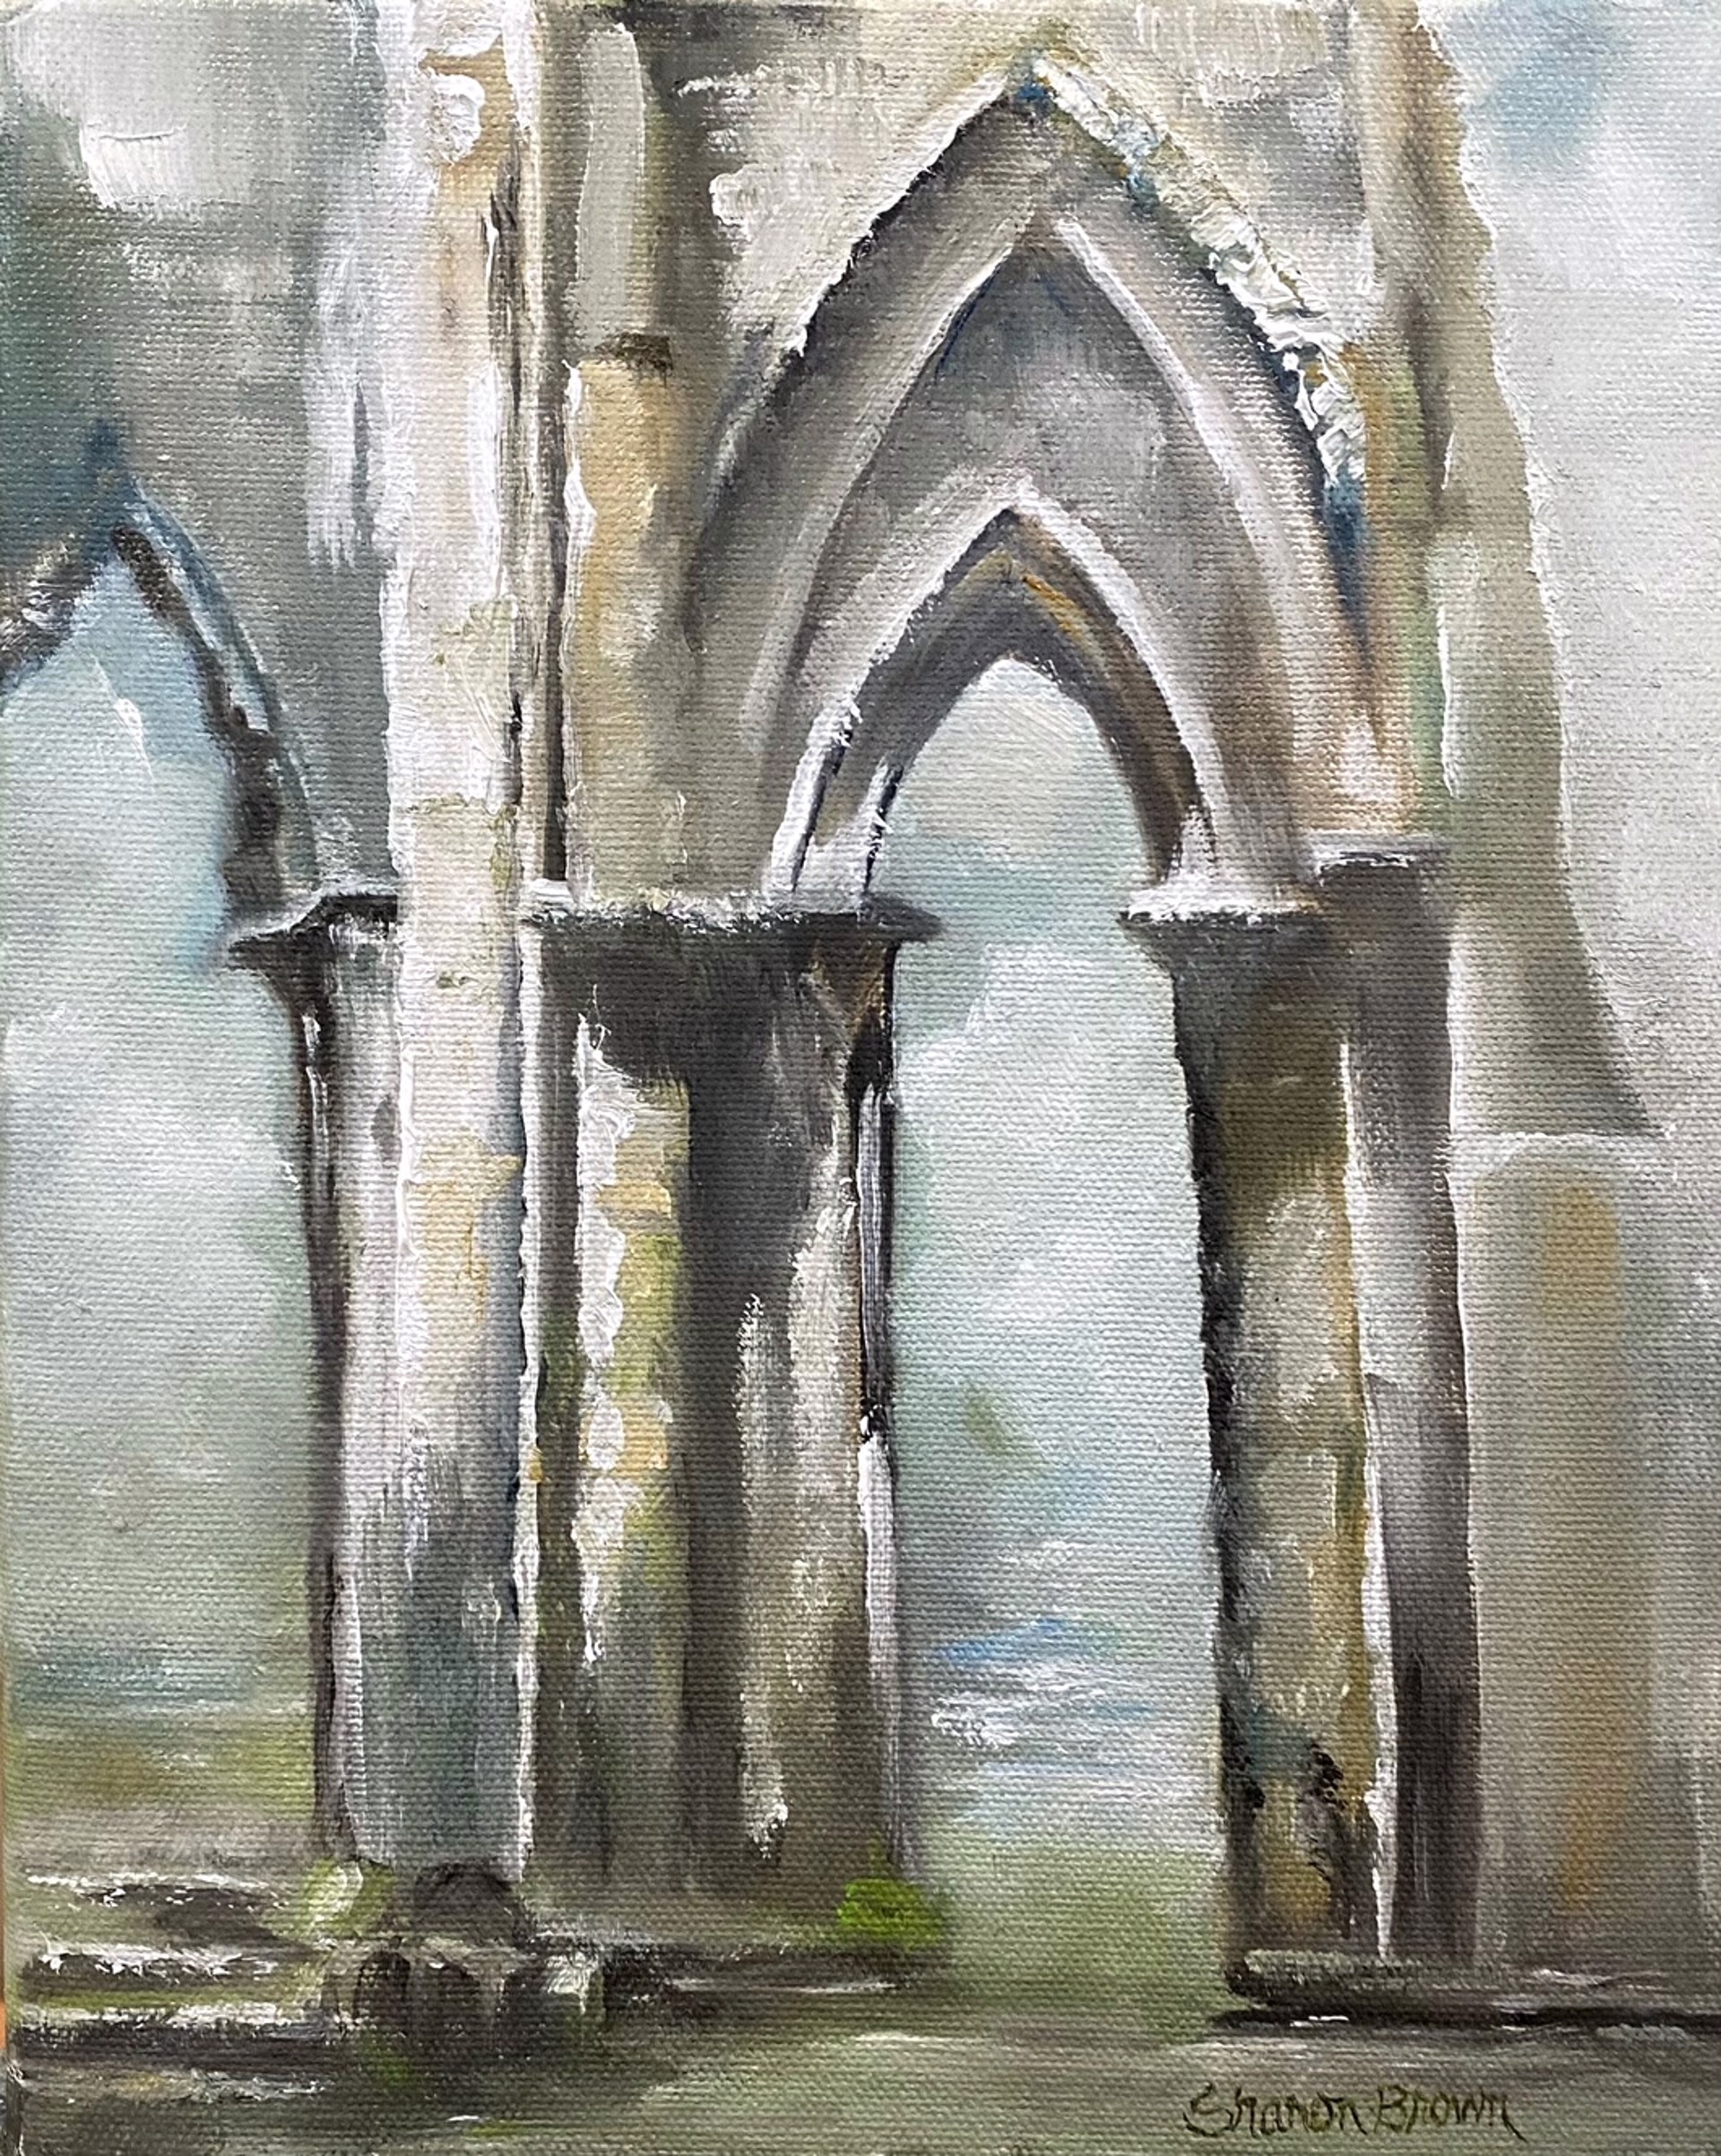 Ecclesiastical Ruin by Sharon Brown